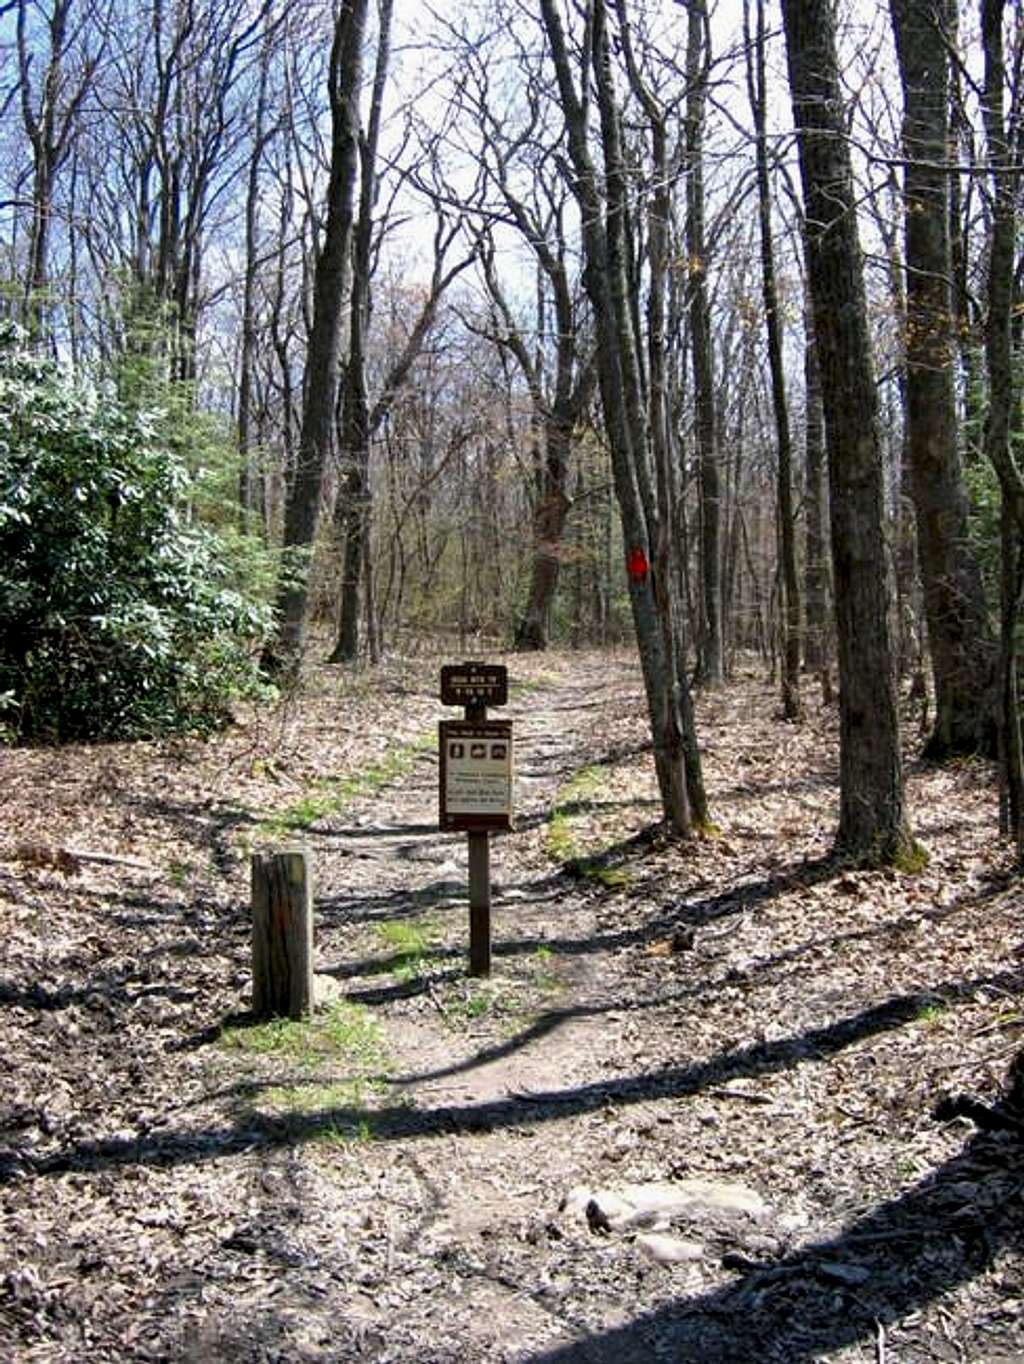 An Iron Mountain Trail marker...